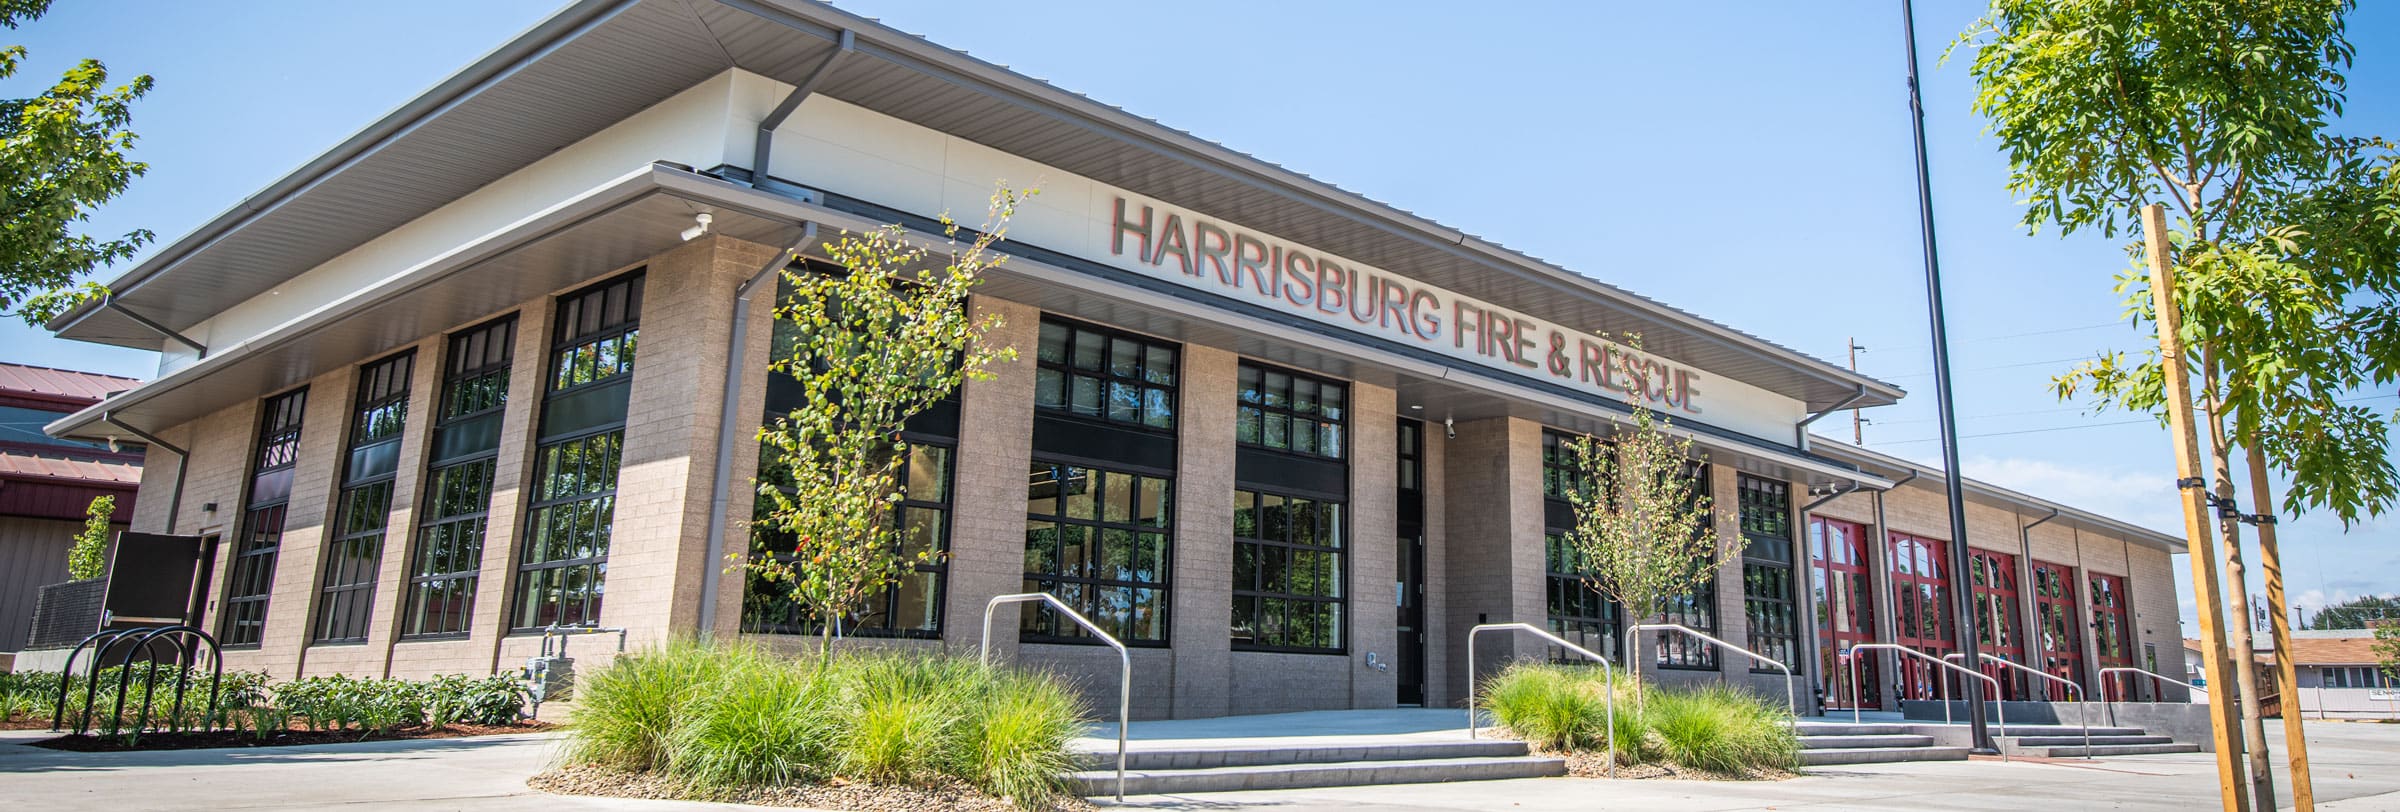 Harrisburg Fire Station